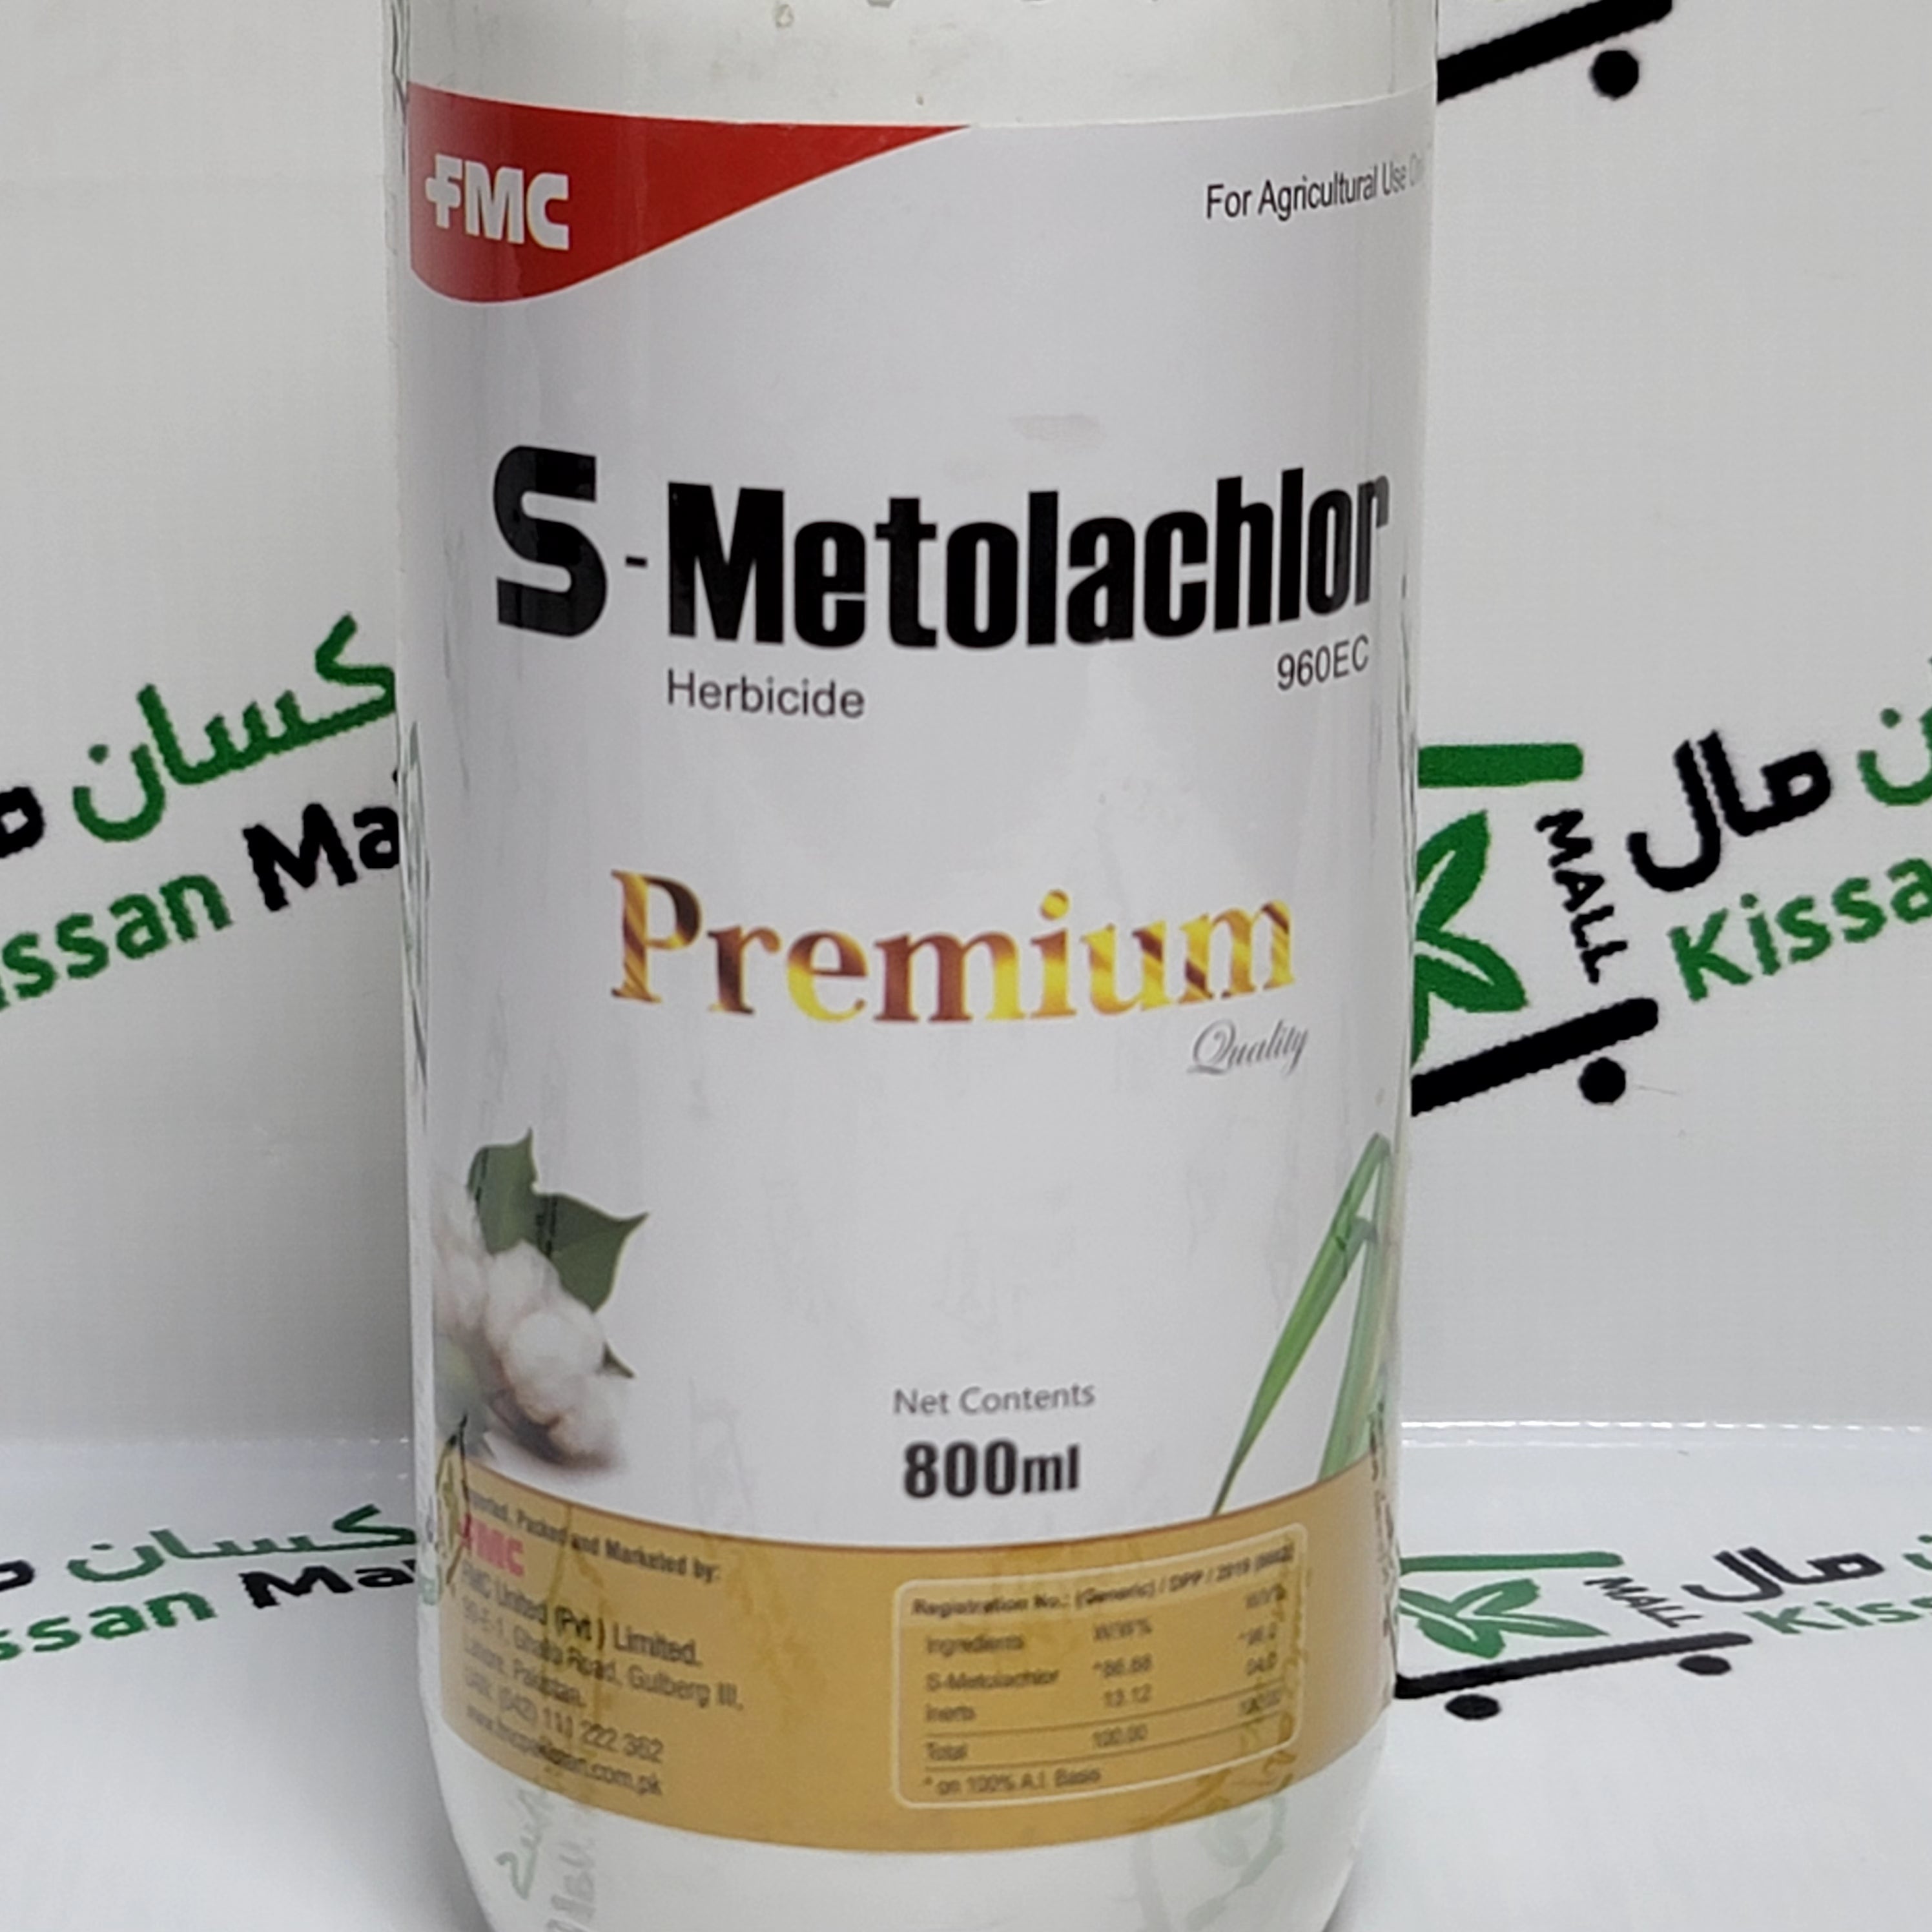 S-Metolachlor